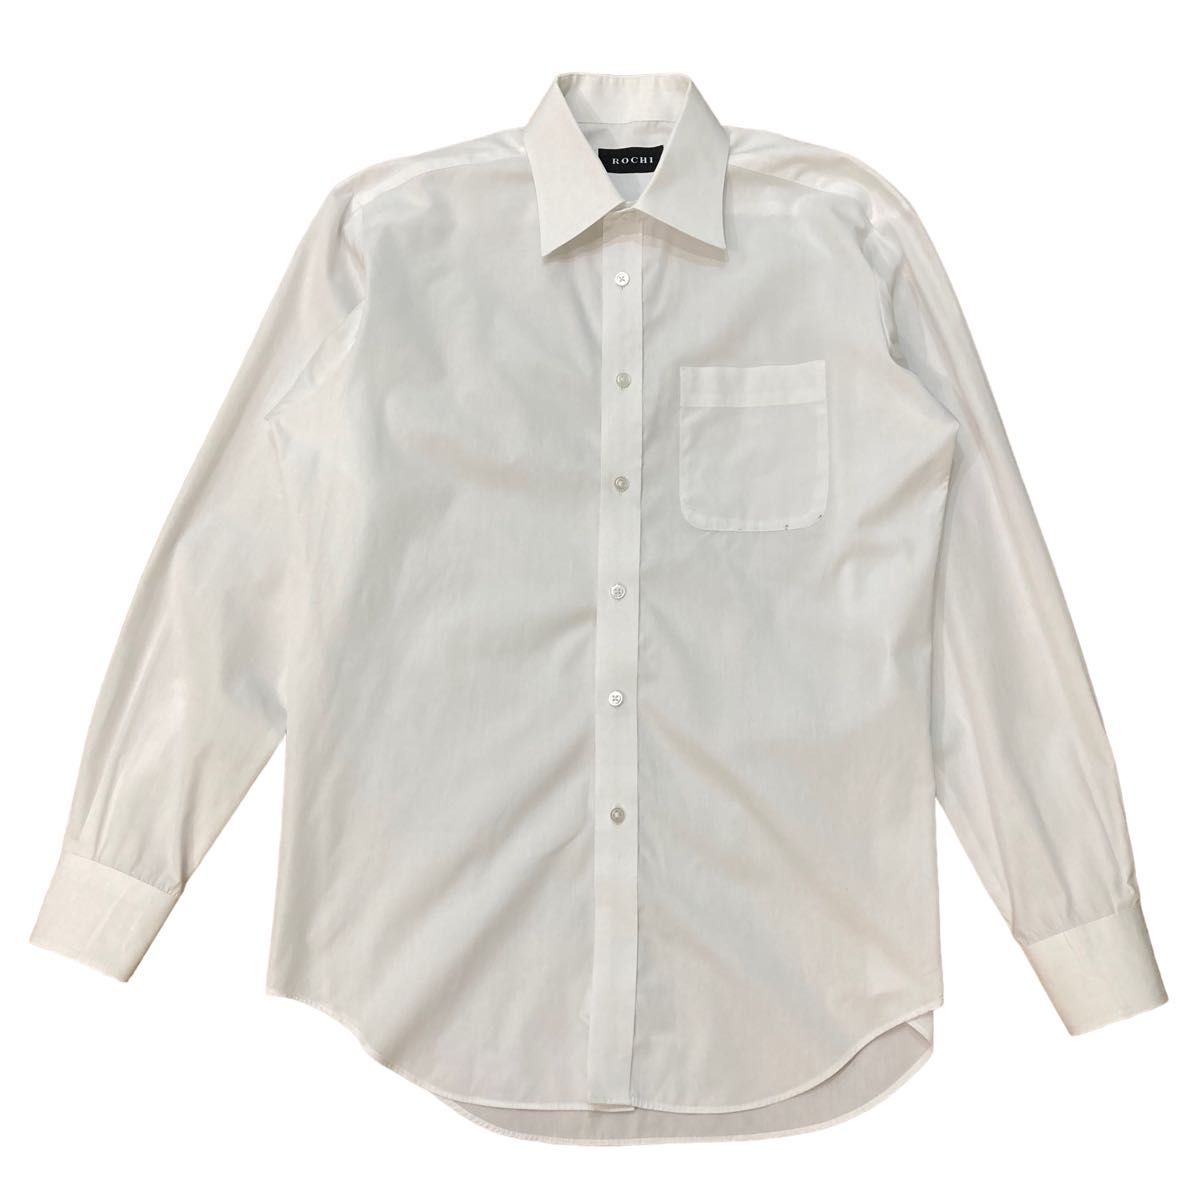 【ROCHI】アオキ  ワイシャツ  長袖  ビジネス  形態安定  レギュラーカラー  ホワイト  M